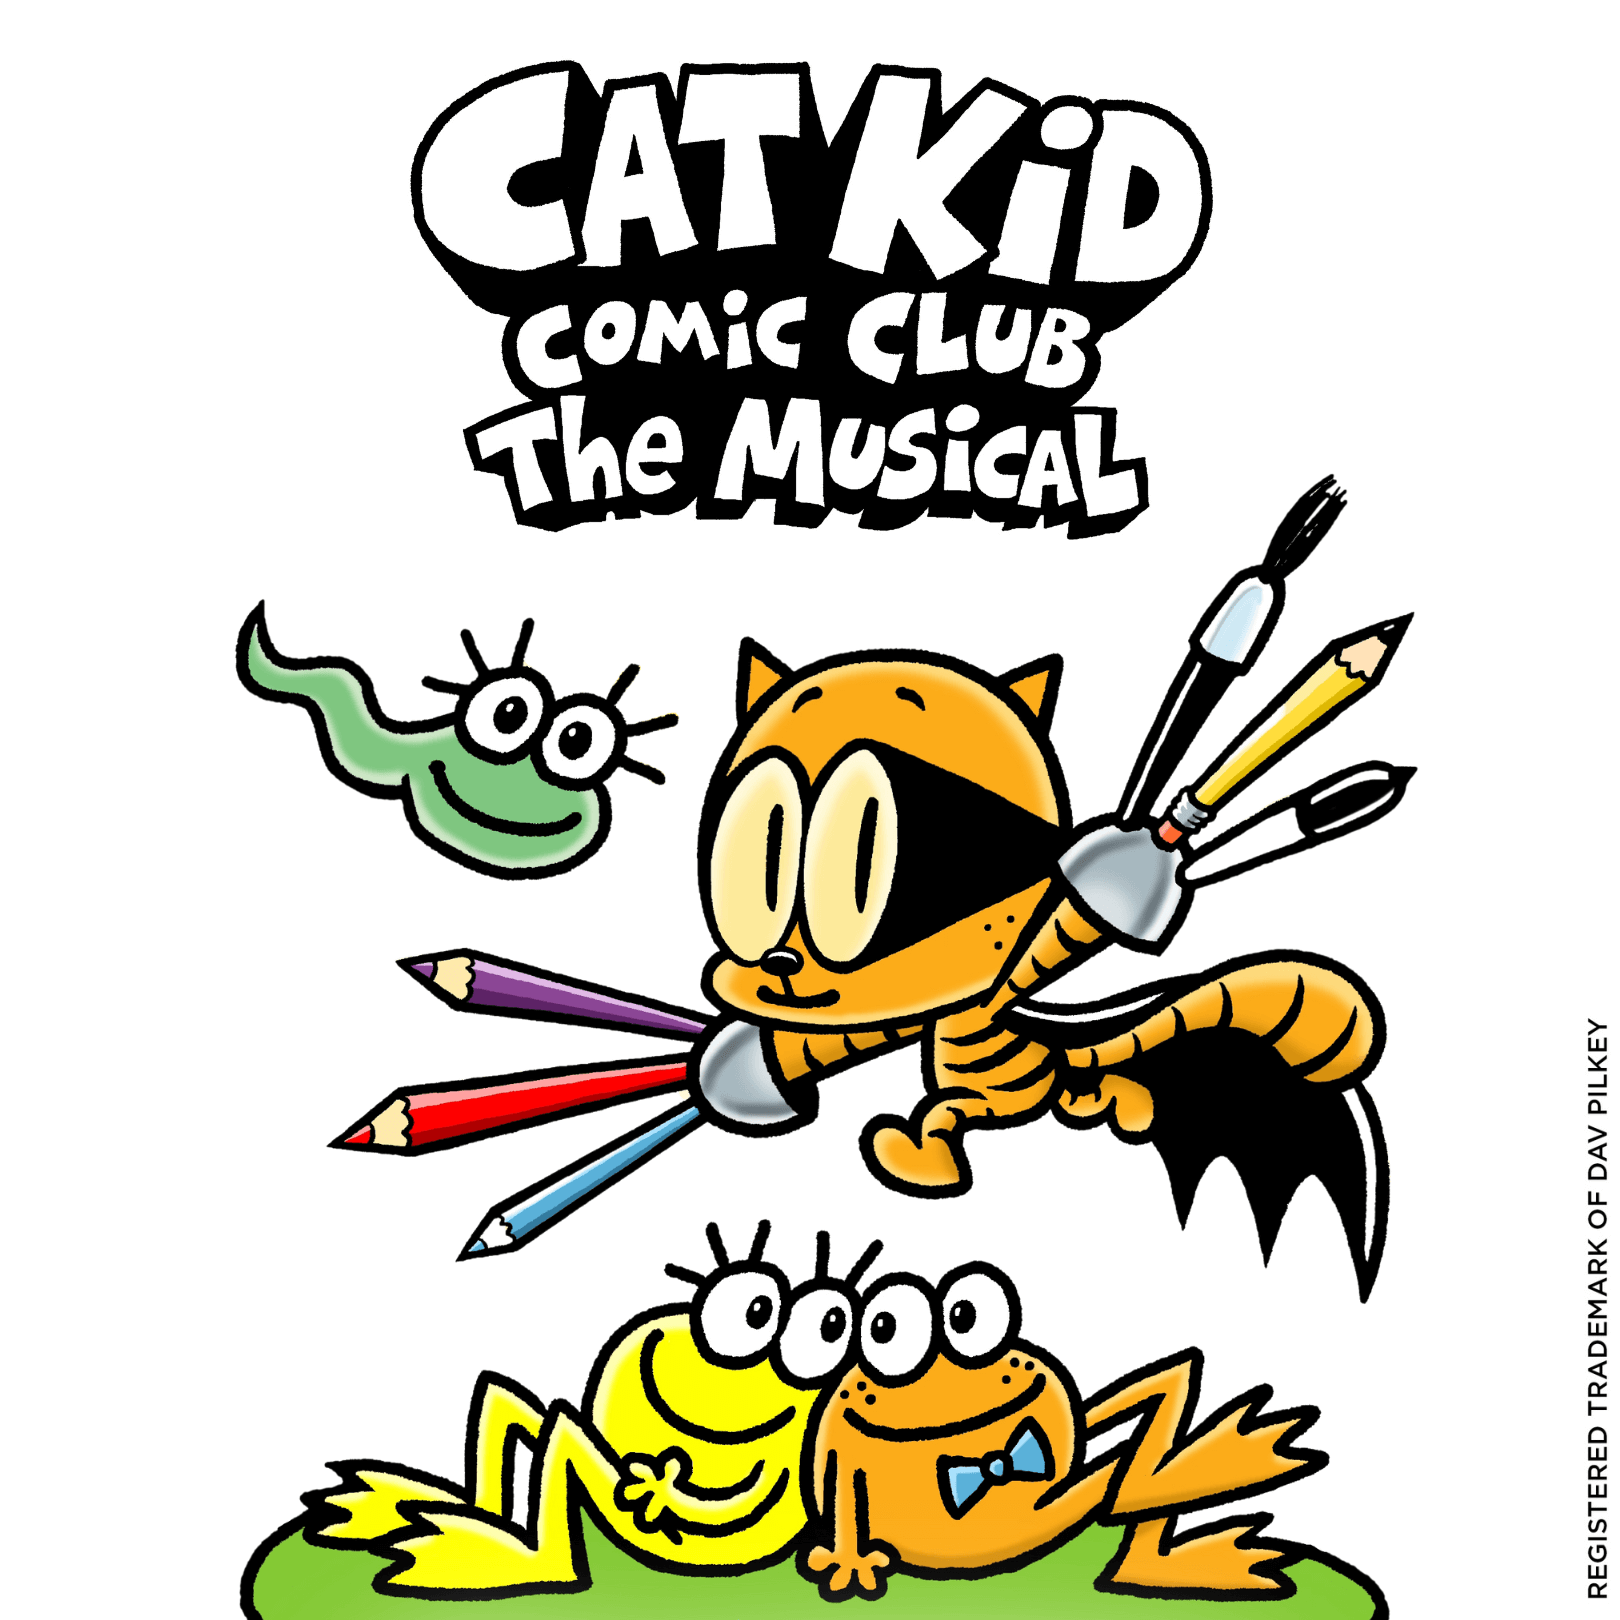 Cat Kid Comic Club: The Musical